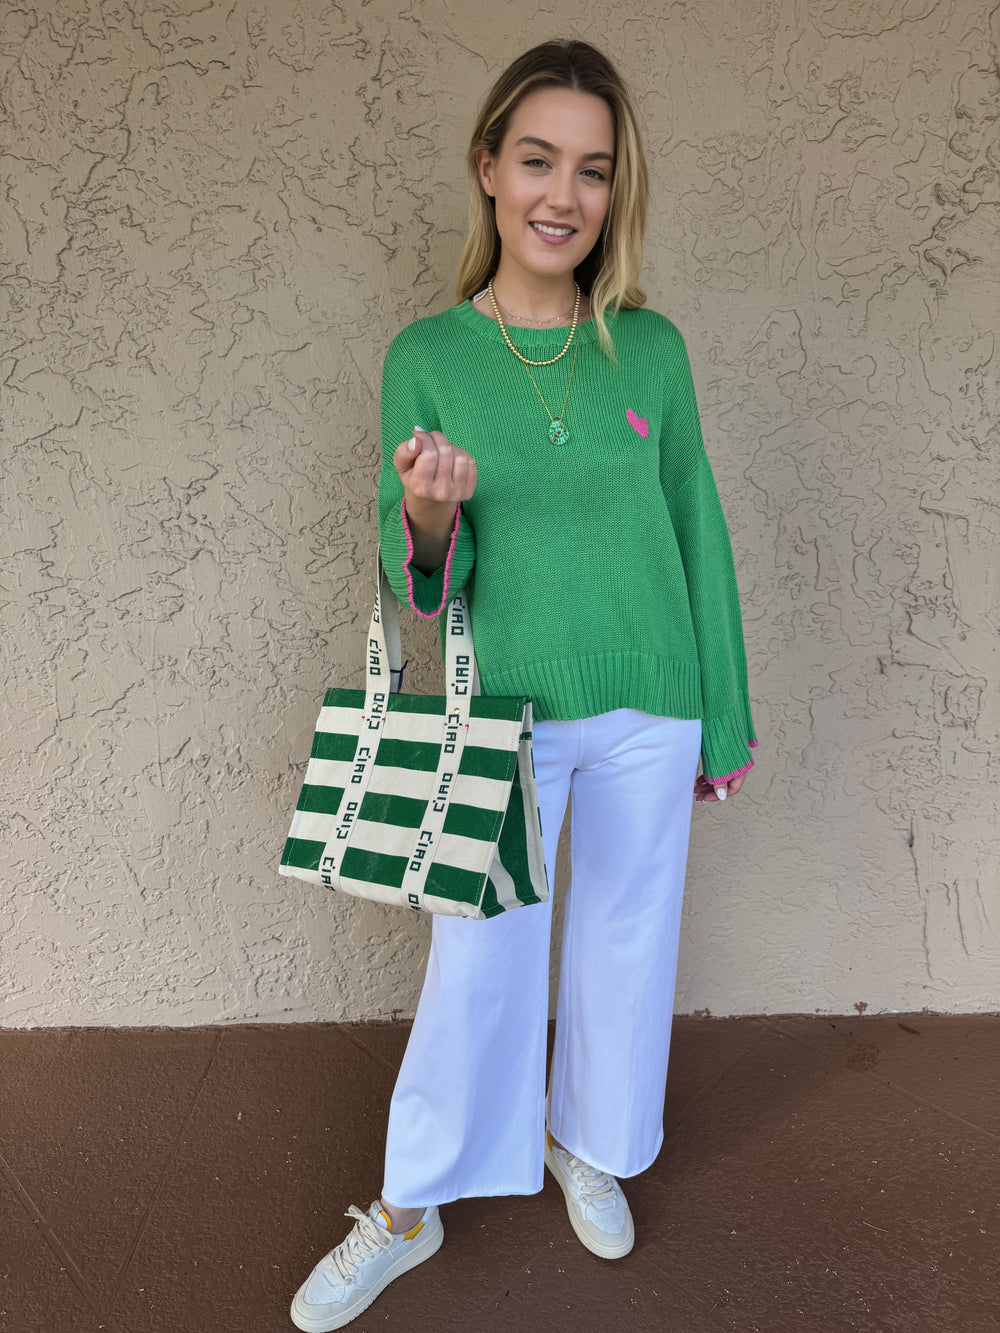 Kerri Rosenthal Summer Sweater - Green